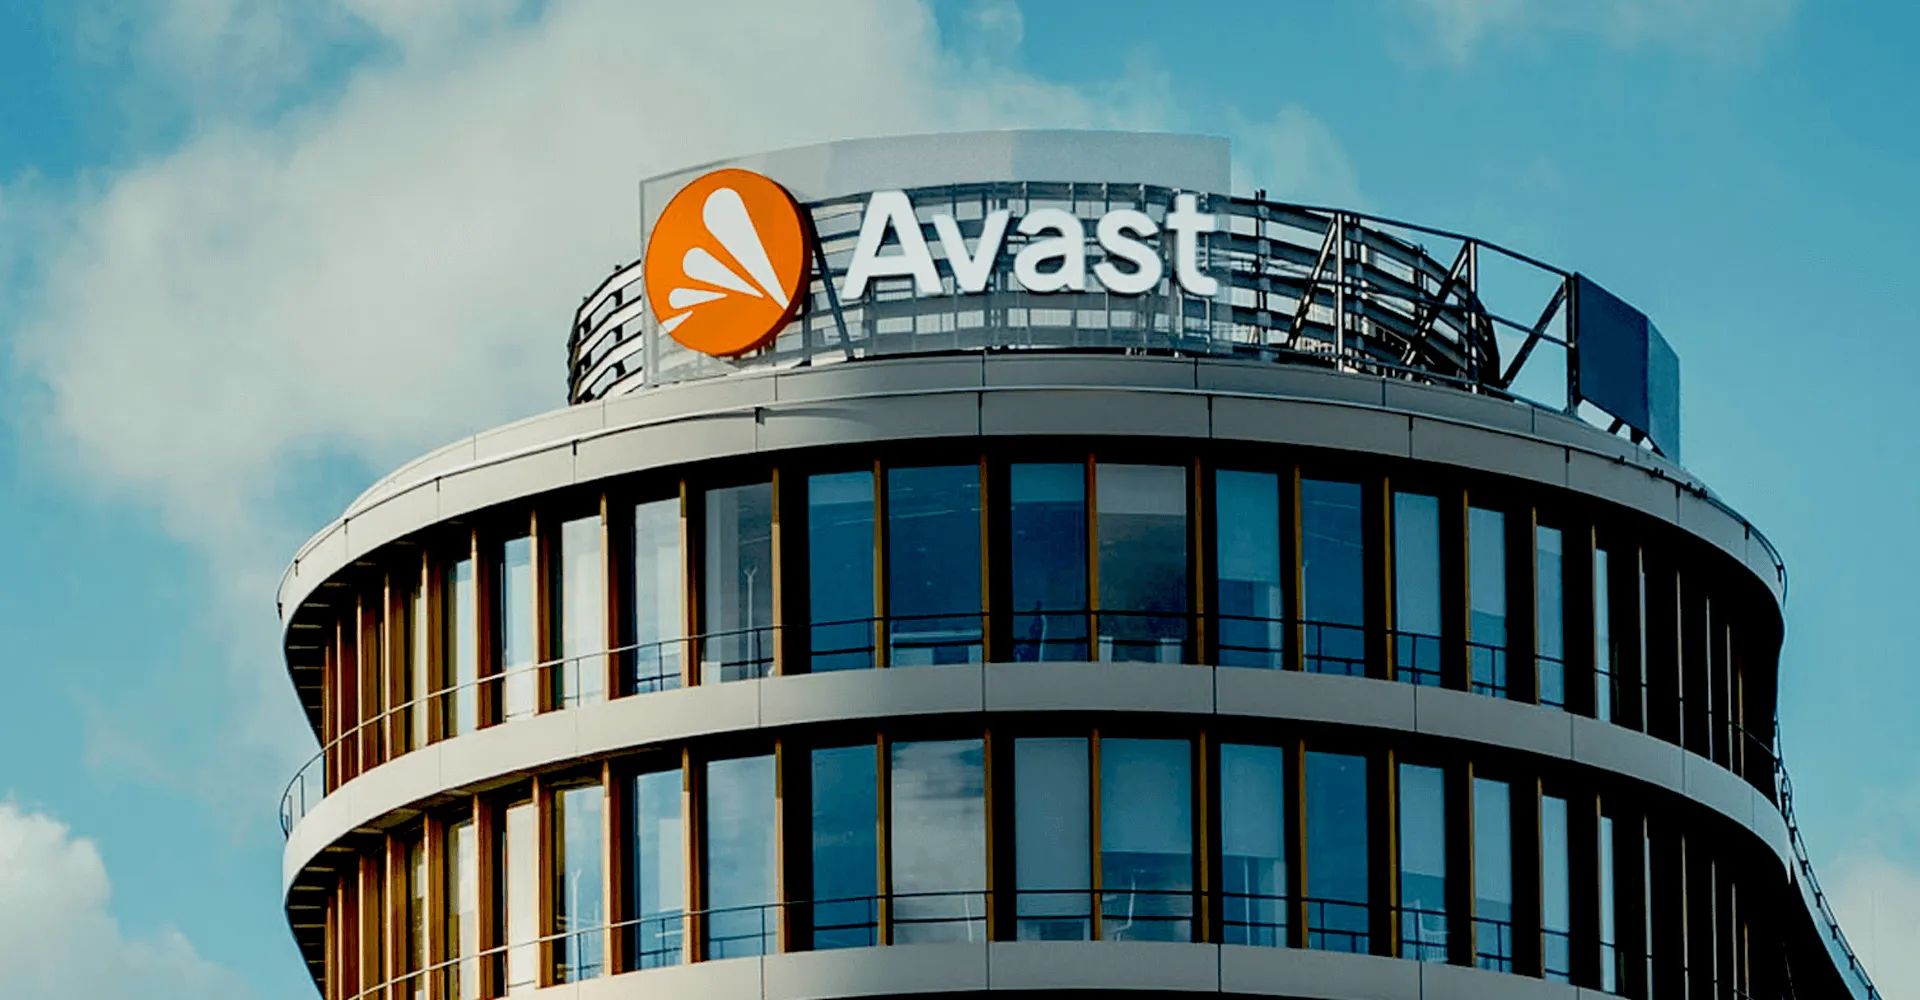 Avast, logo